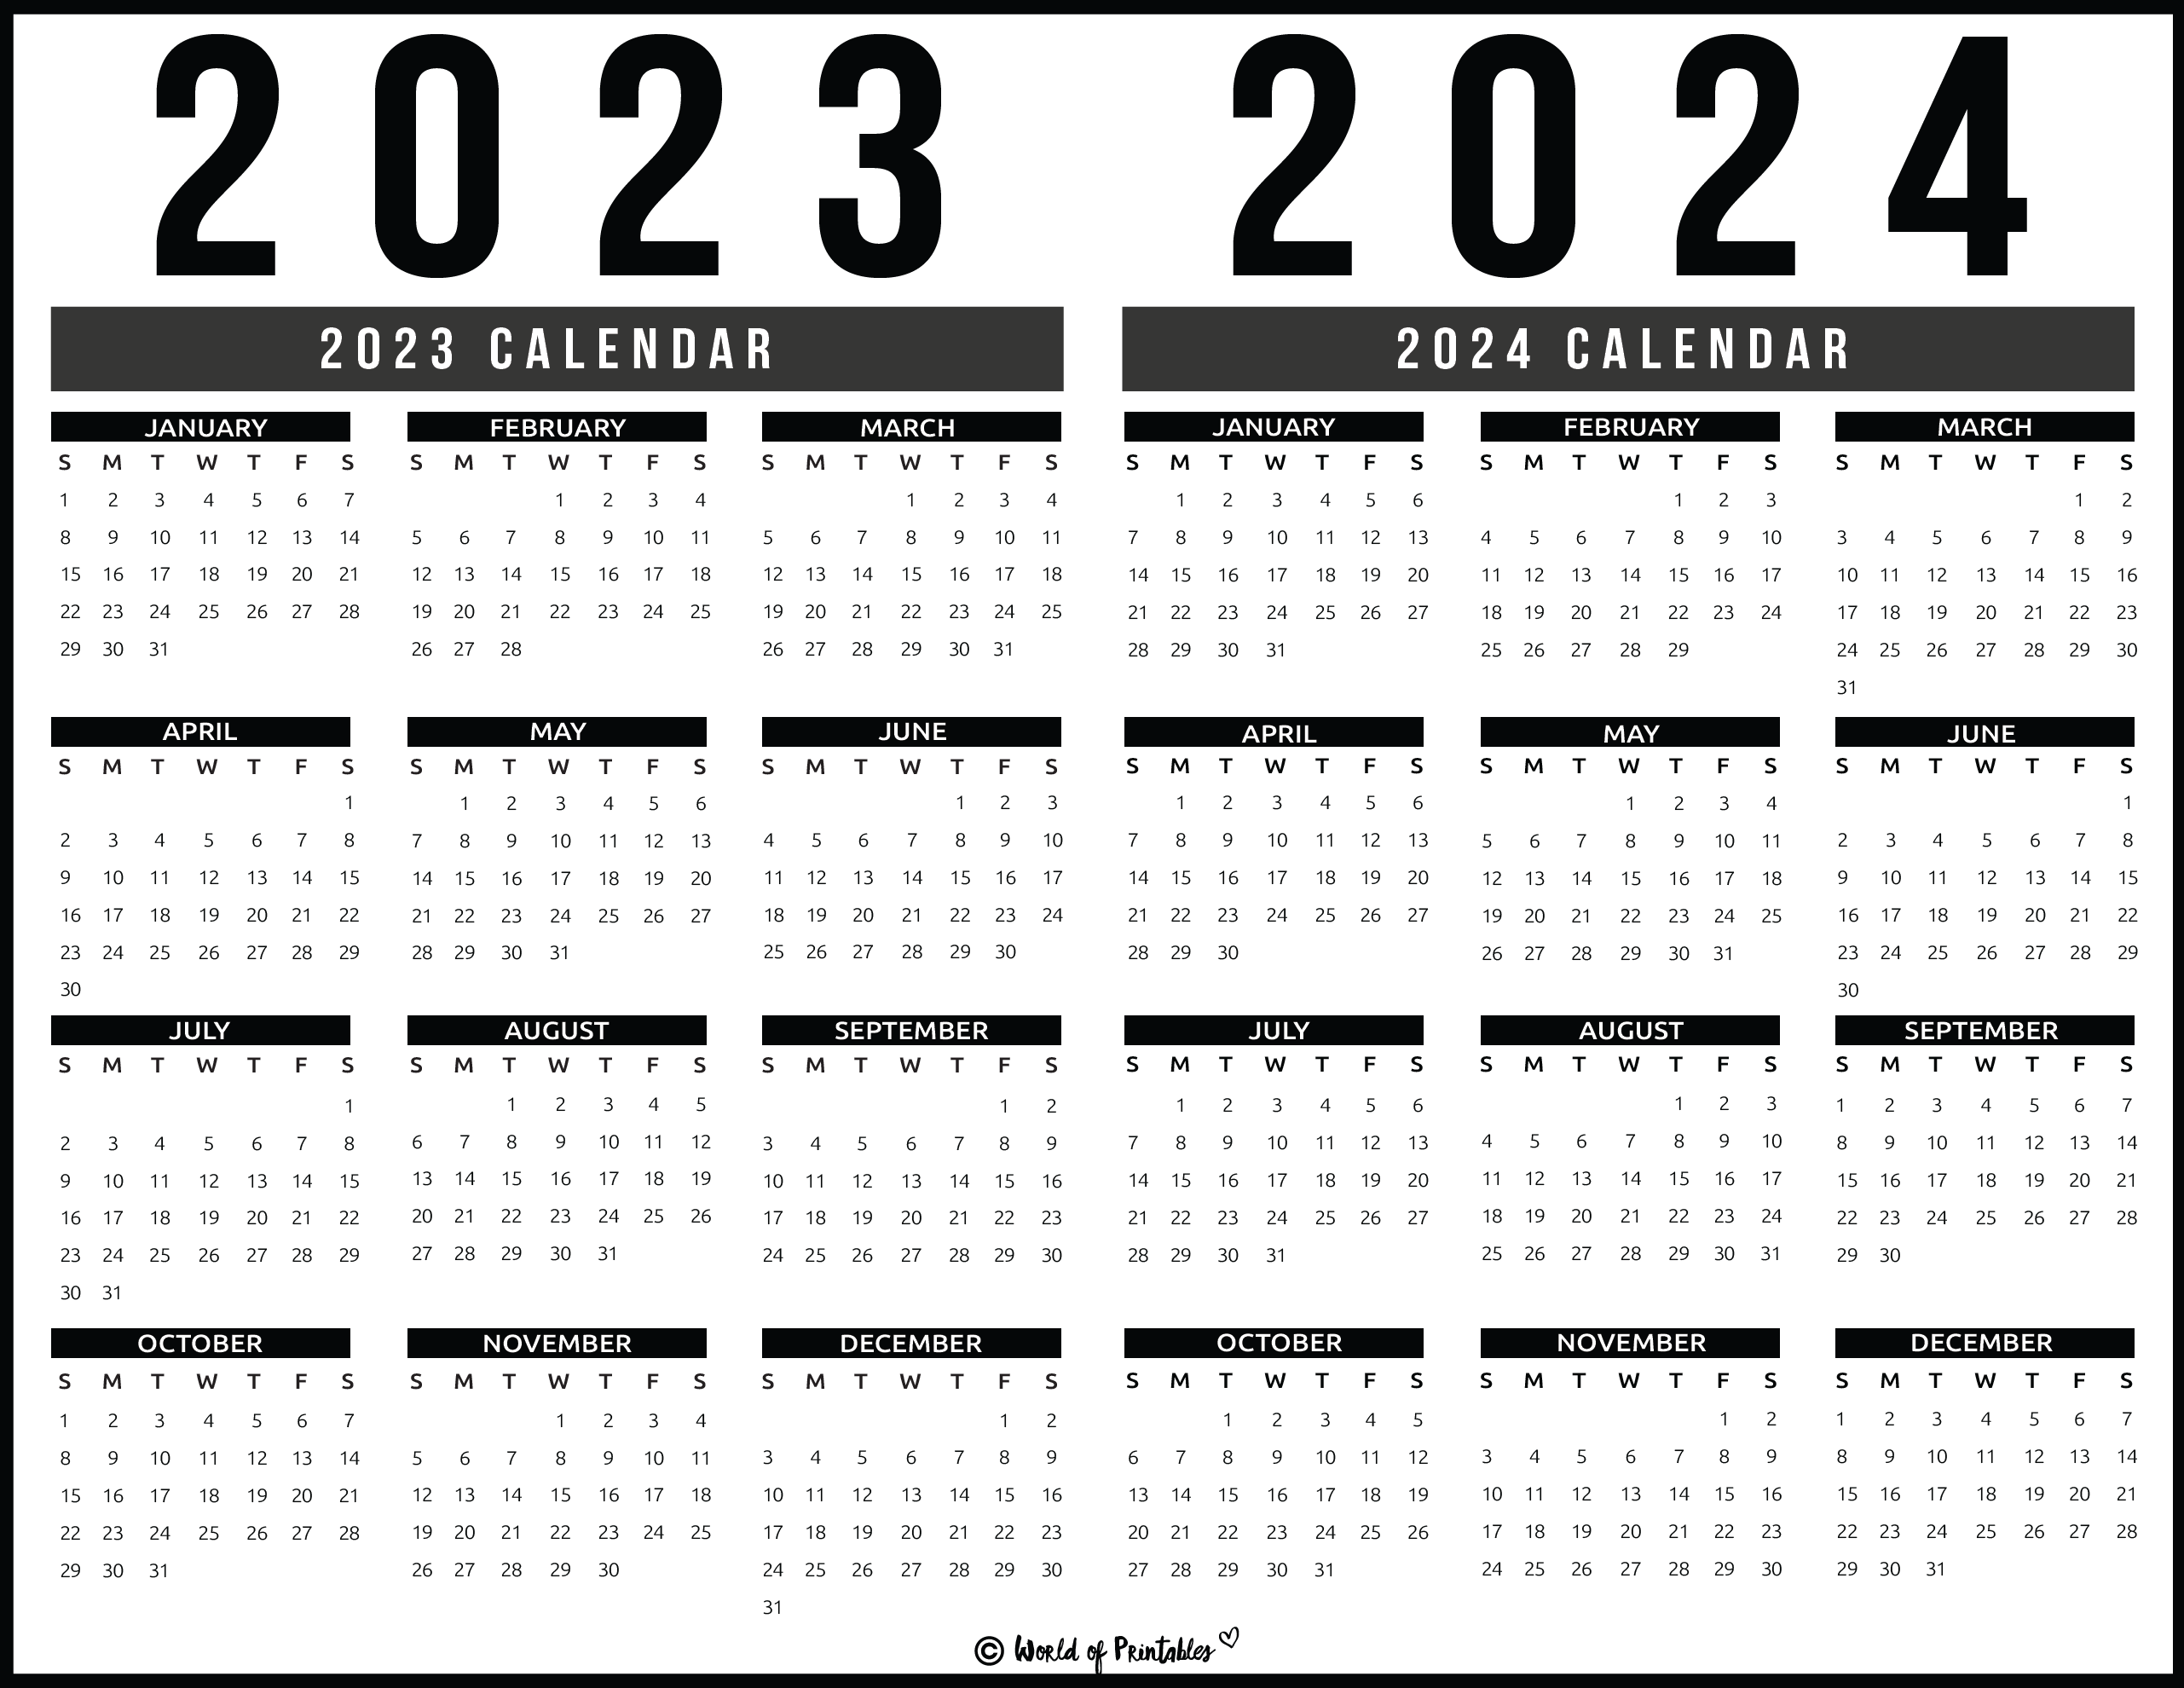 2023 2024 Calendar Free Printables - World Of Printables for 2023 And 2024 Calendar Printable